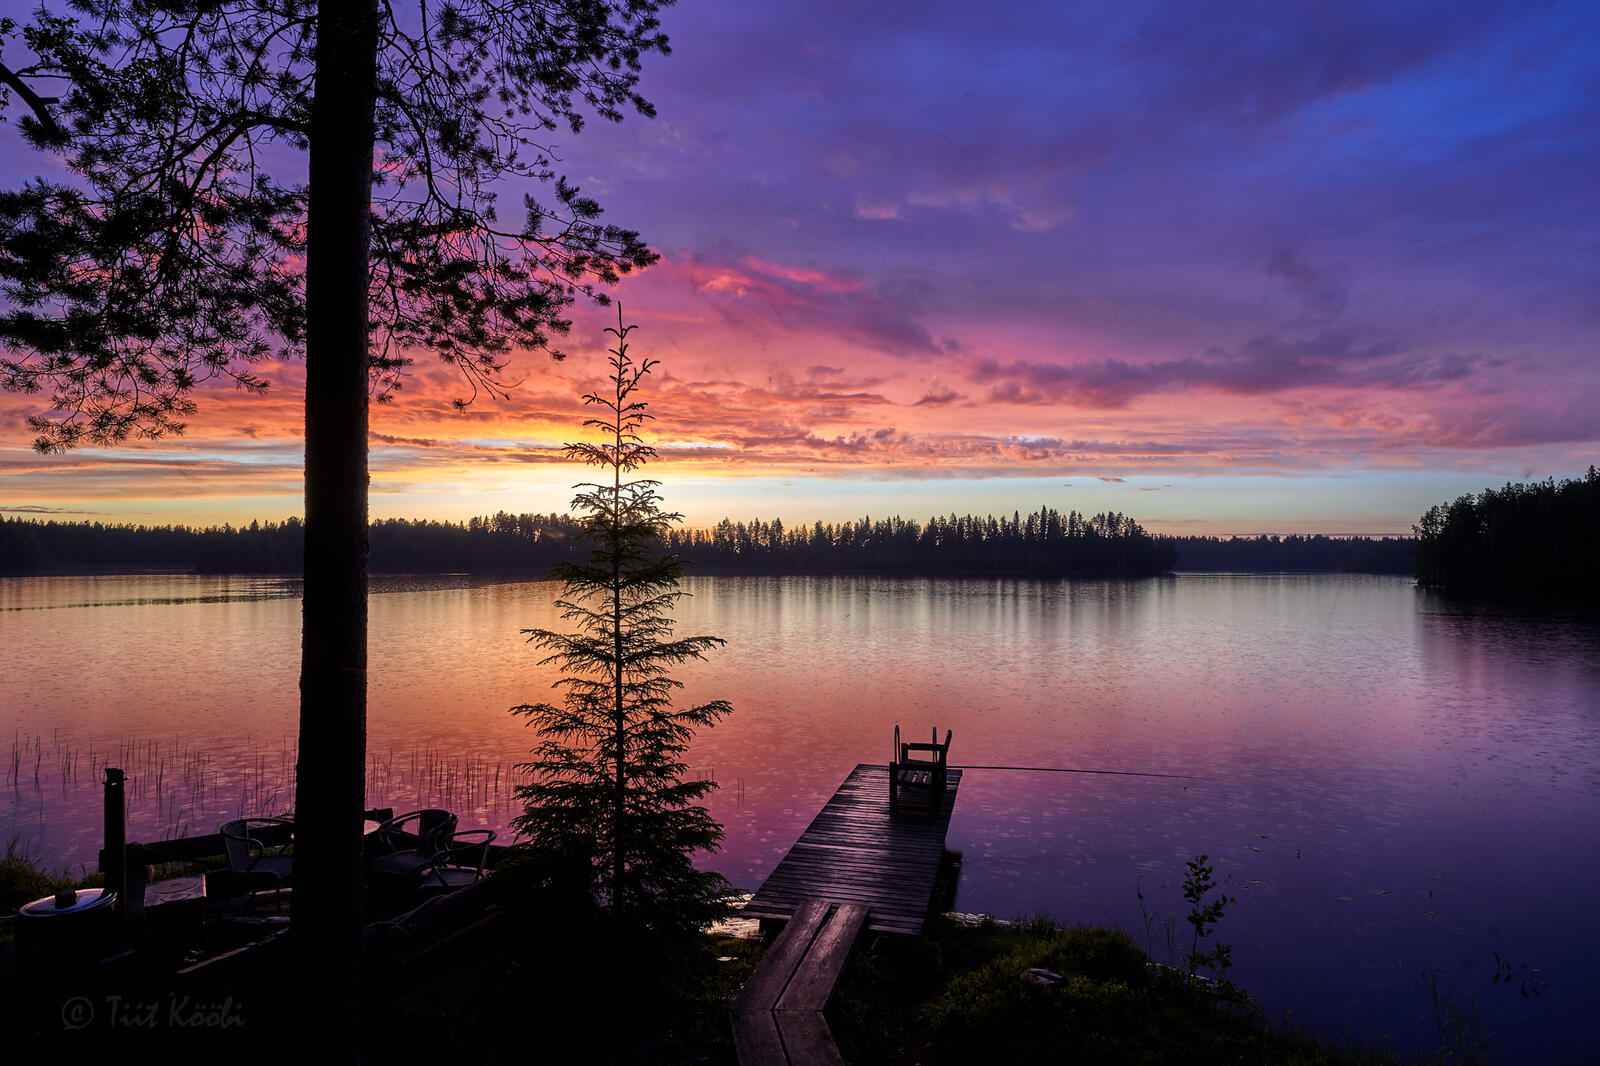 Бесплатное фото Закат на озерах Финляндии